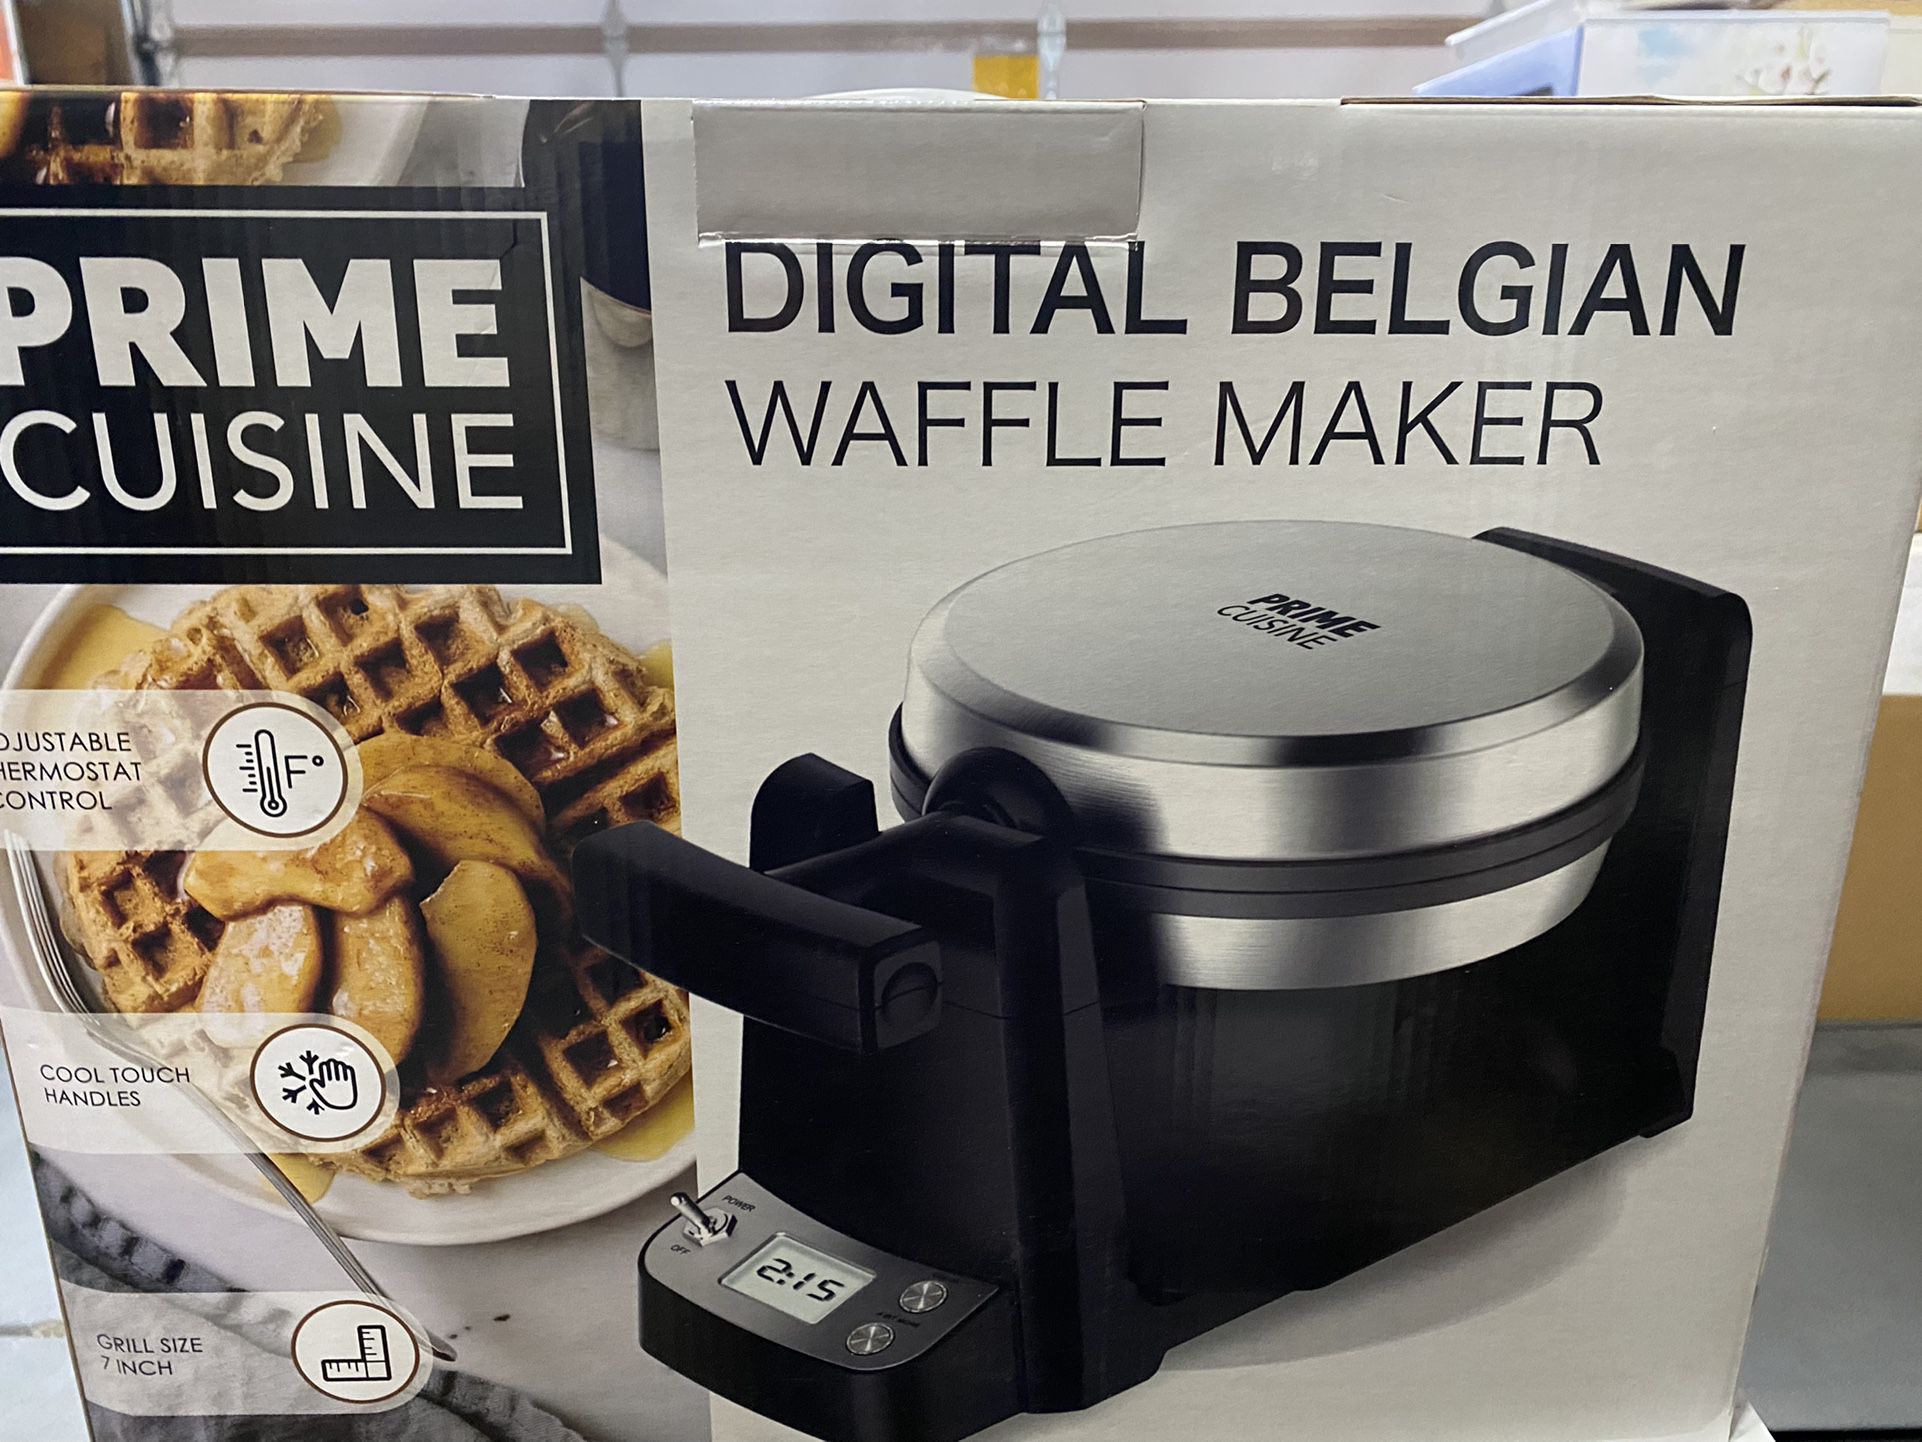 Multi Mini Waffle Maker for Sale in Los Angeles, CA - OfferUp